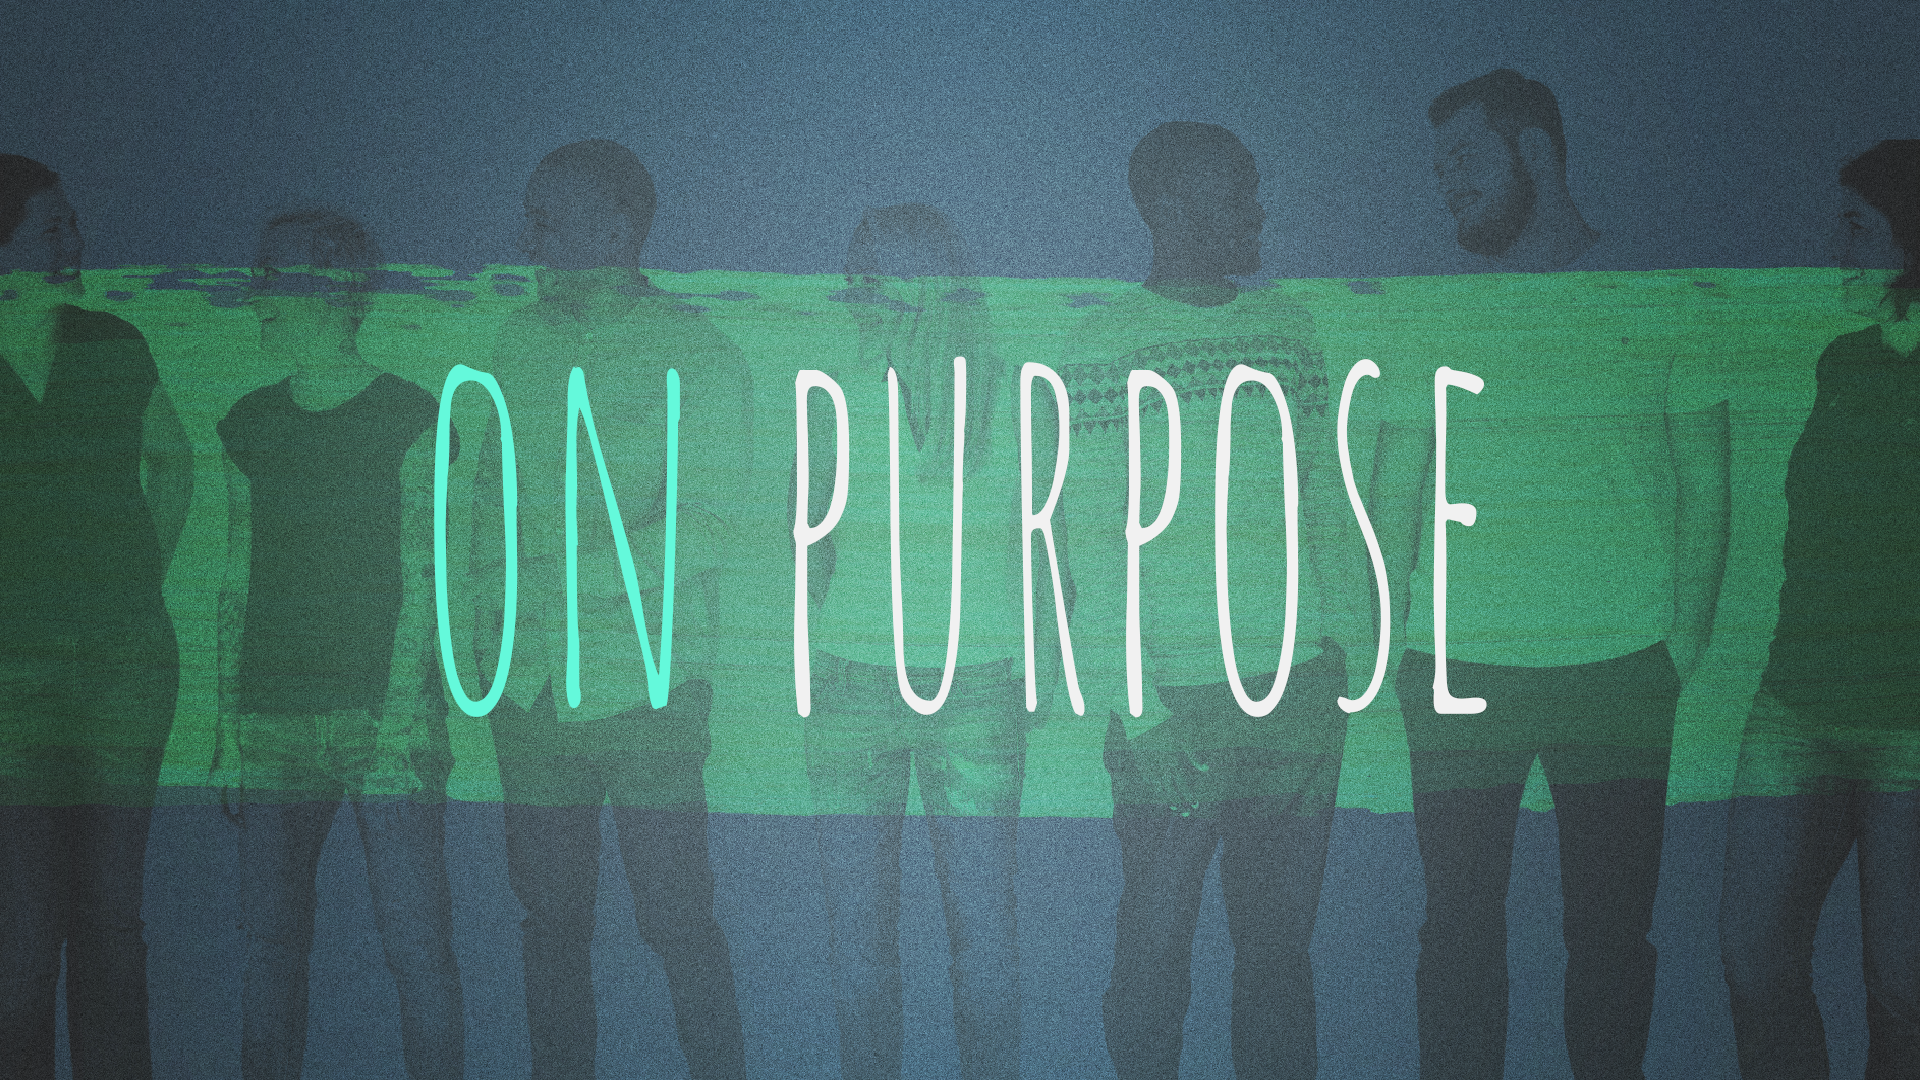 Sermon Graphic on On Purpose